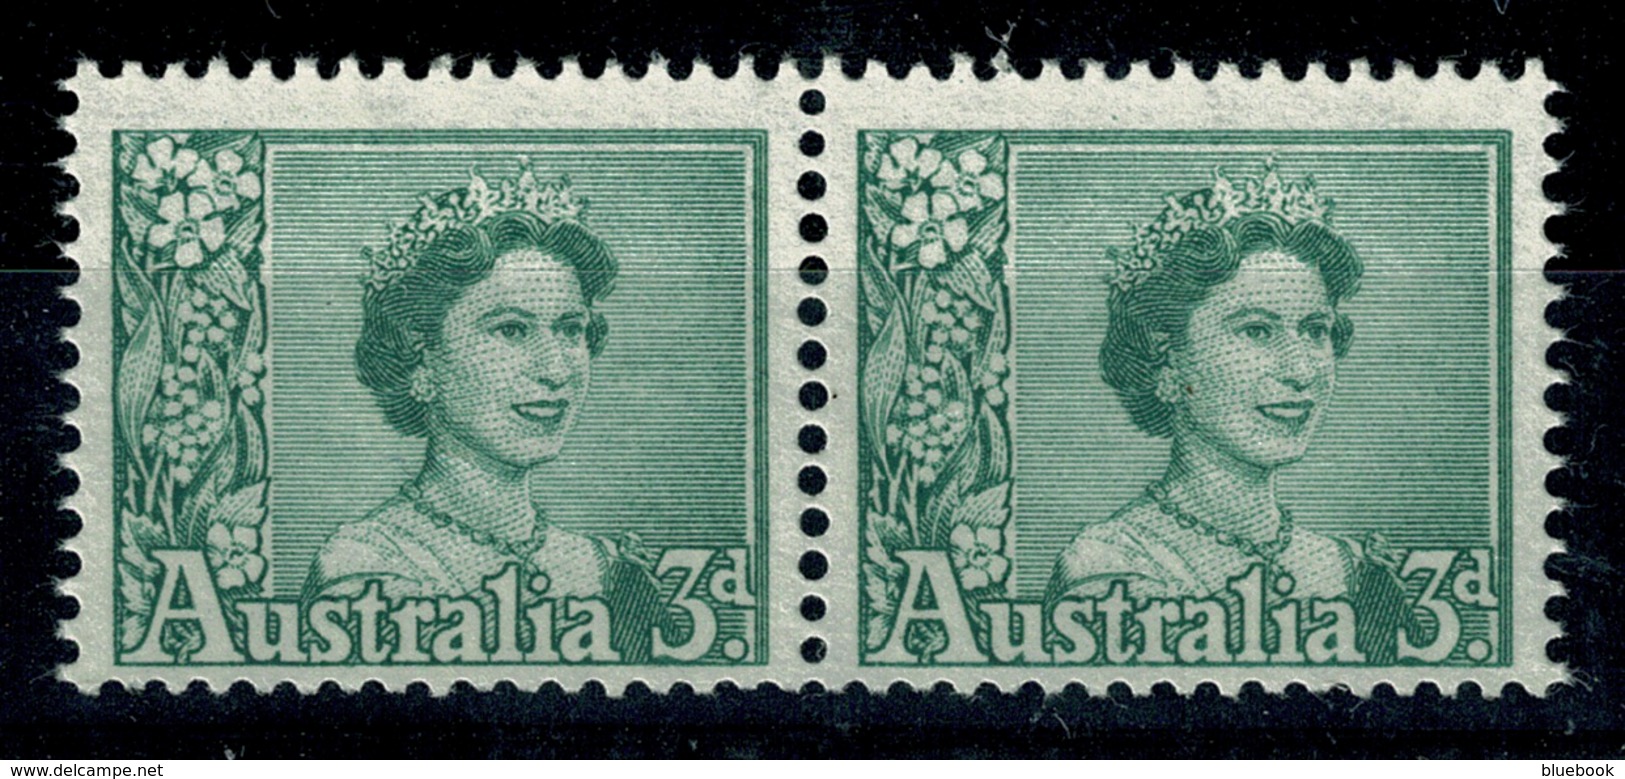 Ref 1236 - 1959 Australia - QEII 3d Coil Pair Stamps MNH - SG 311a - Neufs